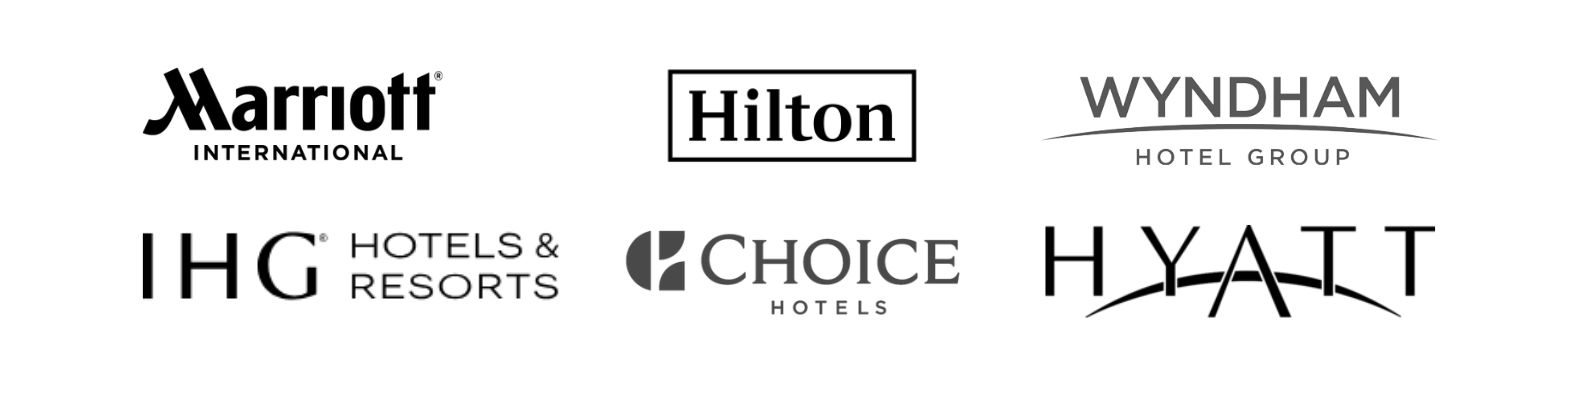 Make group reservations at Marriott, Hilton, Wyndham, IHG, Choice and Hyatt hotels.